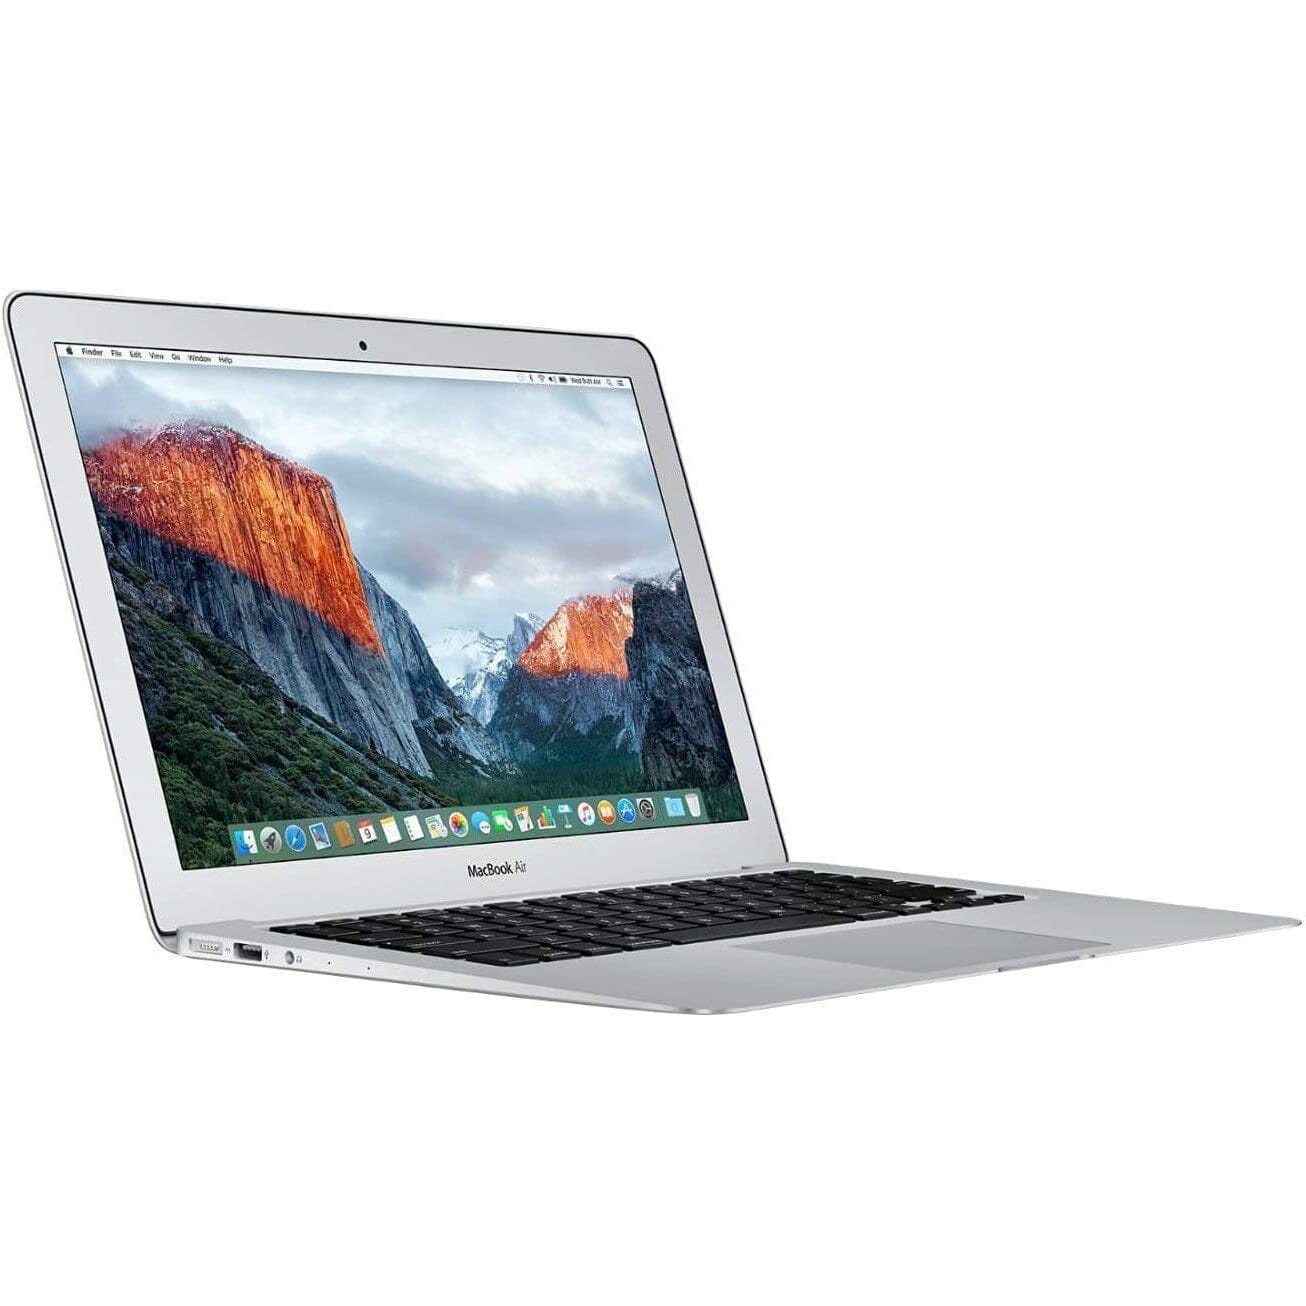 Apple MacBook Air MD628LL/A Intel Core i5 1.60GHz 4GB Memory 128GB SSD  13.3in Display (Refurbished)